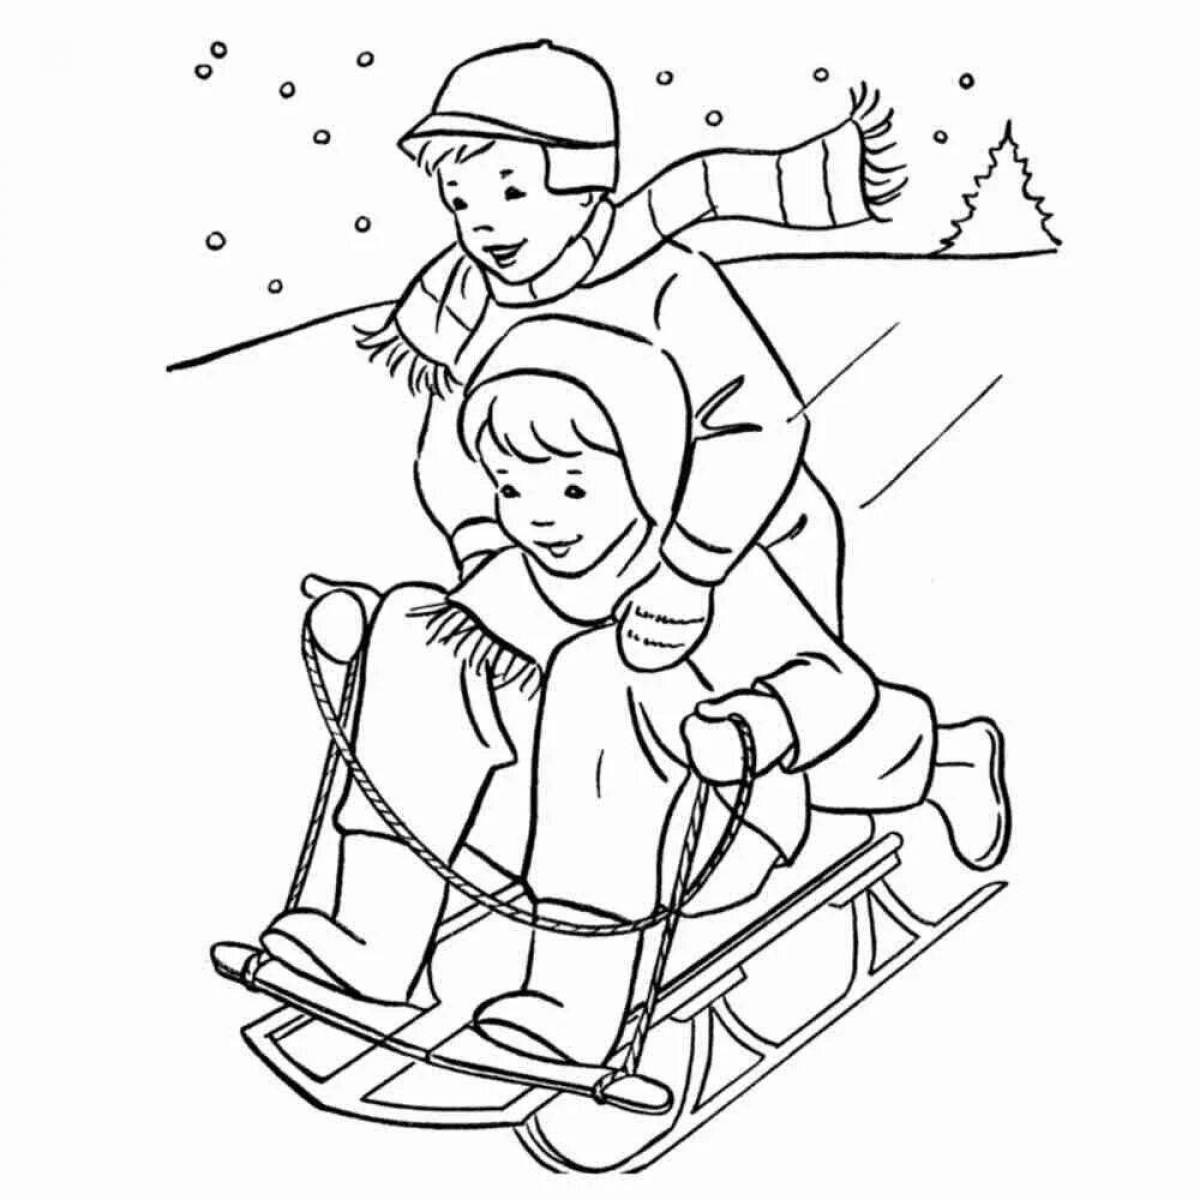 Fun sleigh coloring for kids